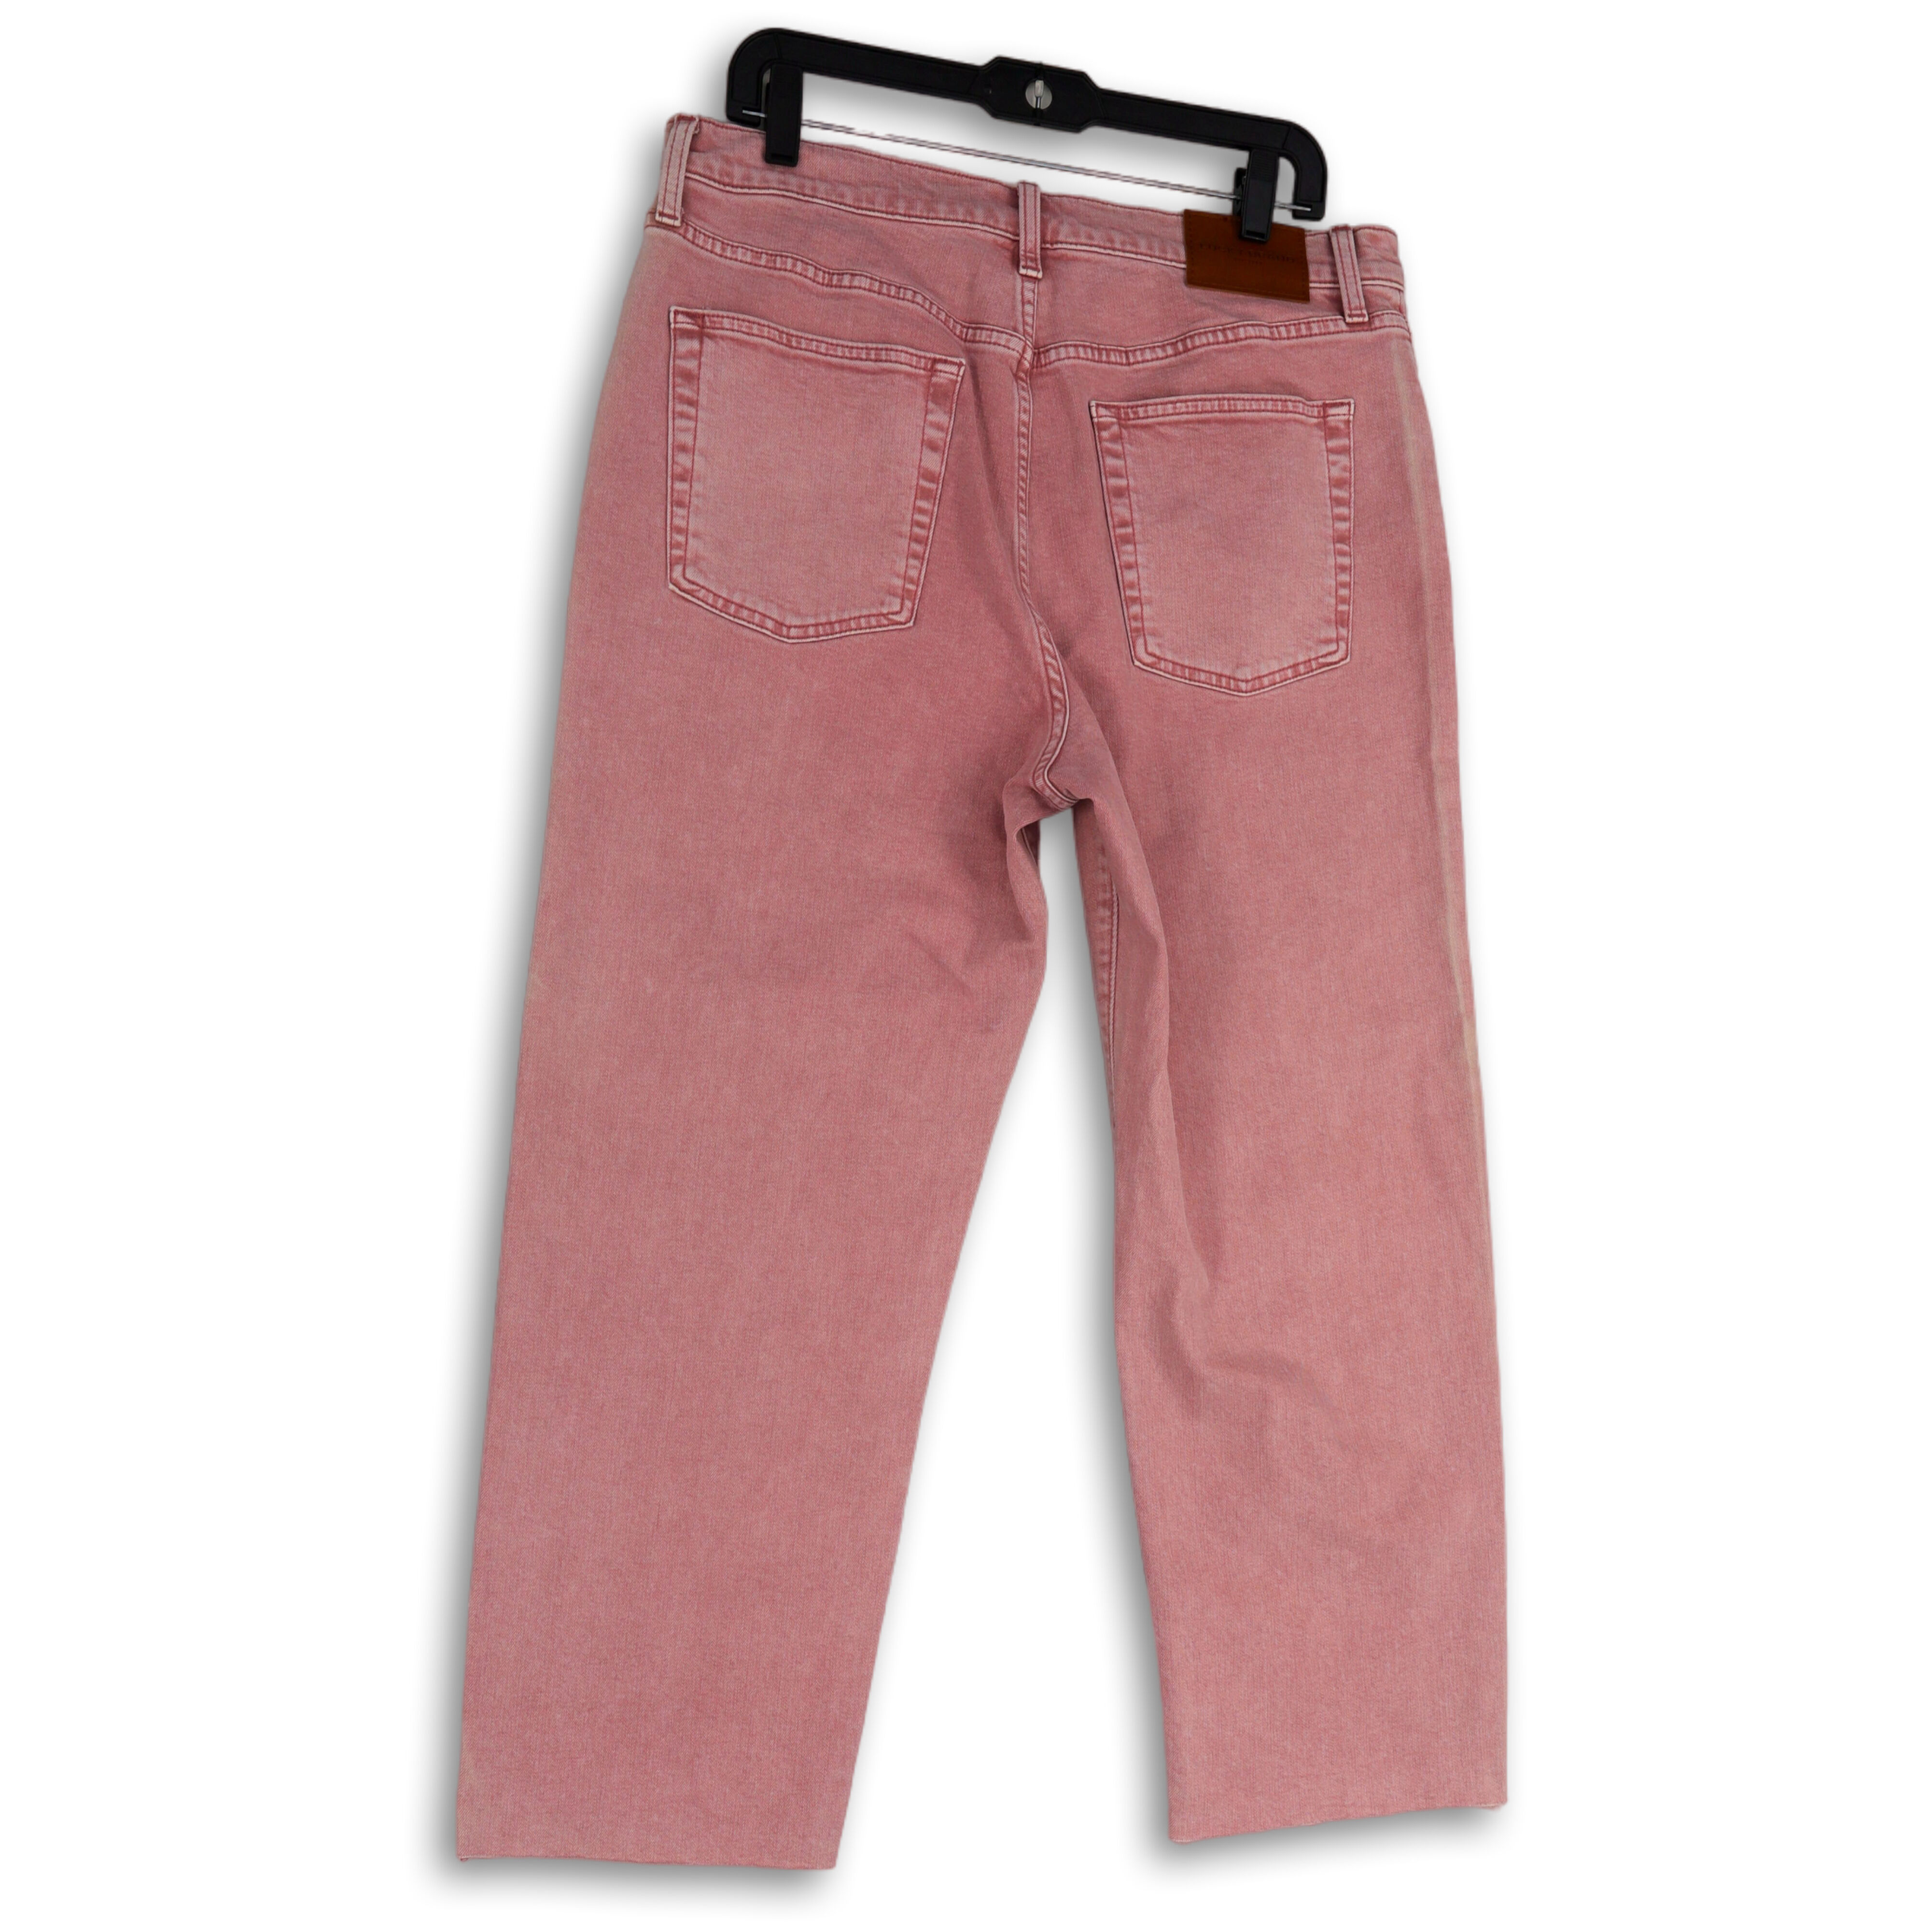 Baggy Low Jeans - Light pink - Ladies | H&M US